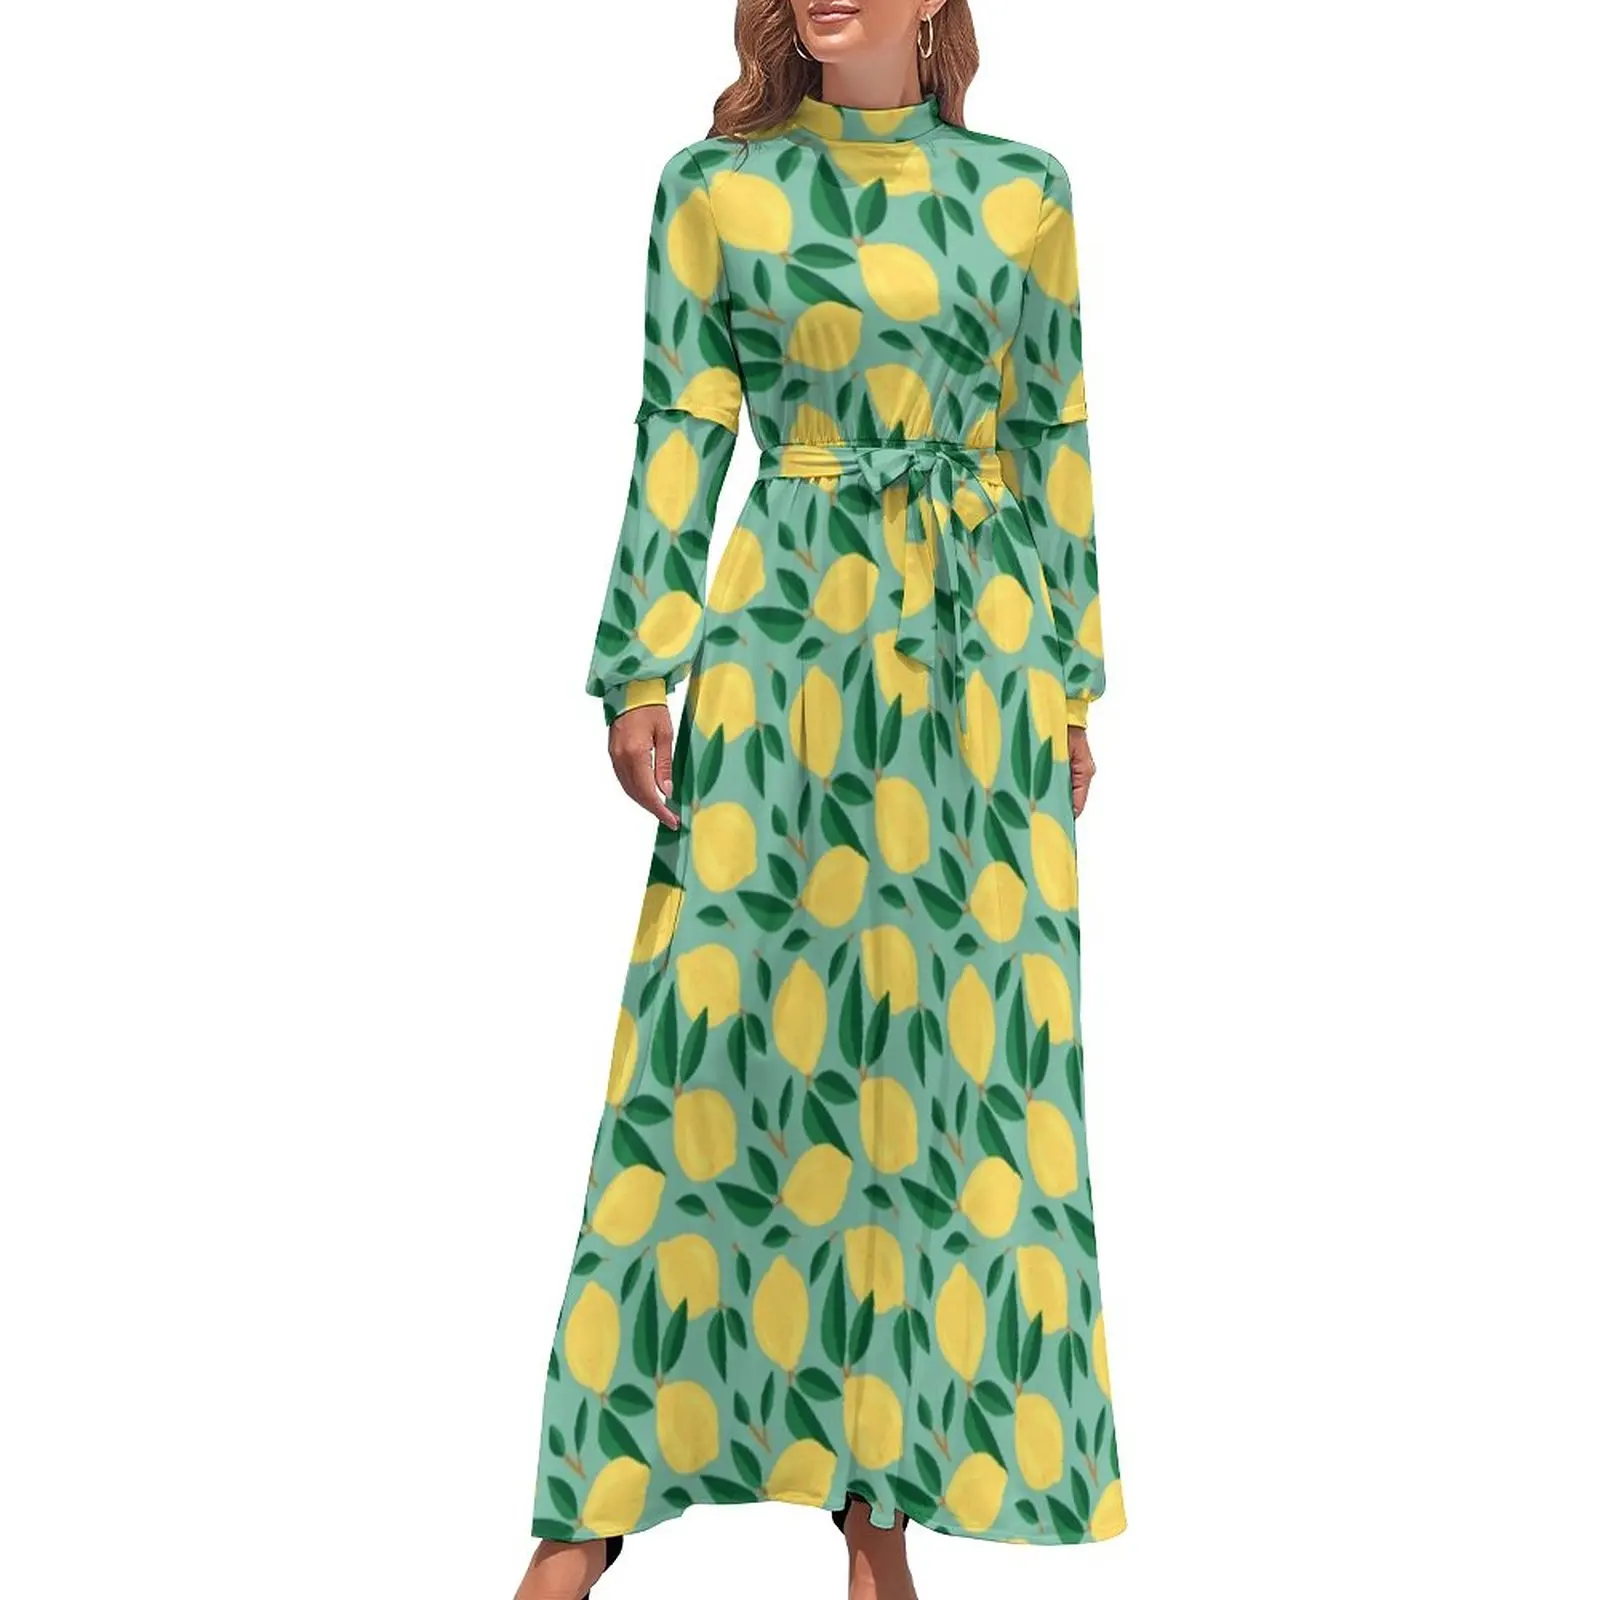 Marley Lemon Dress Cute Fruit Print Sexy Maxi Dress Stylish Beach Long Dresses High Waist Design Clothes